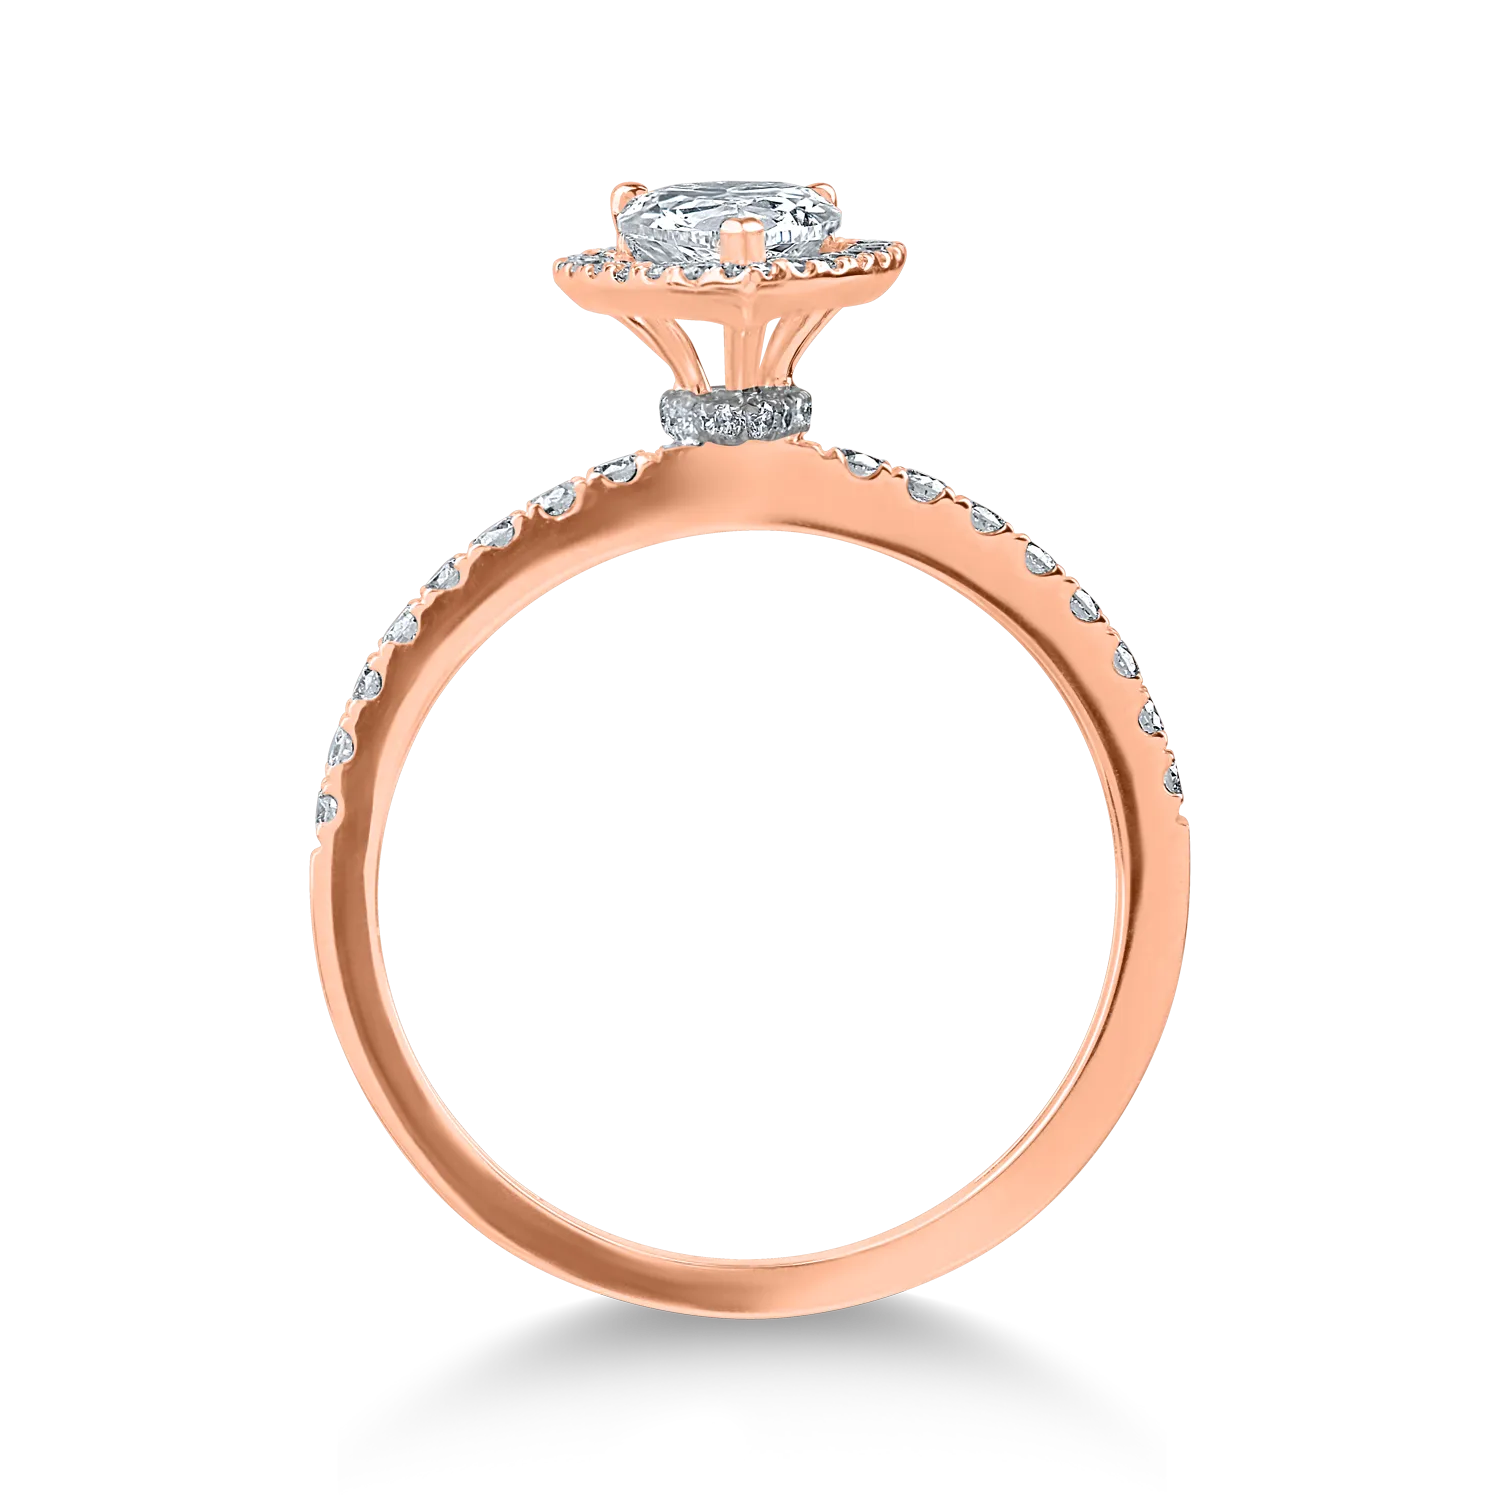 Inel de logodna din aur roz cu diamant de 0.8ct si diamante de 0.3ct